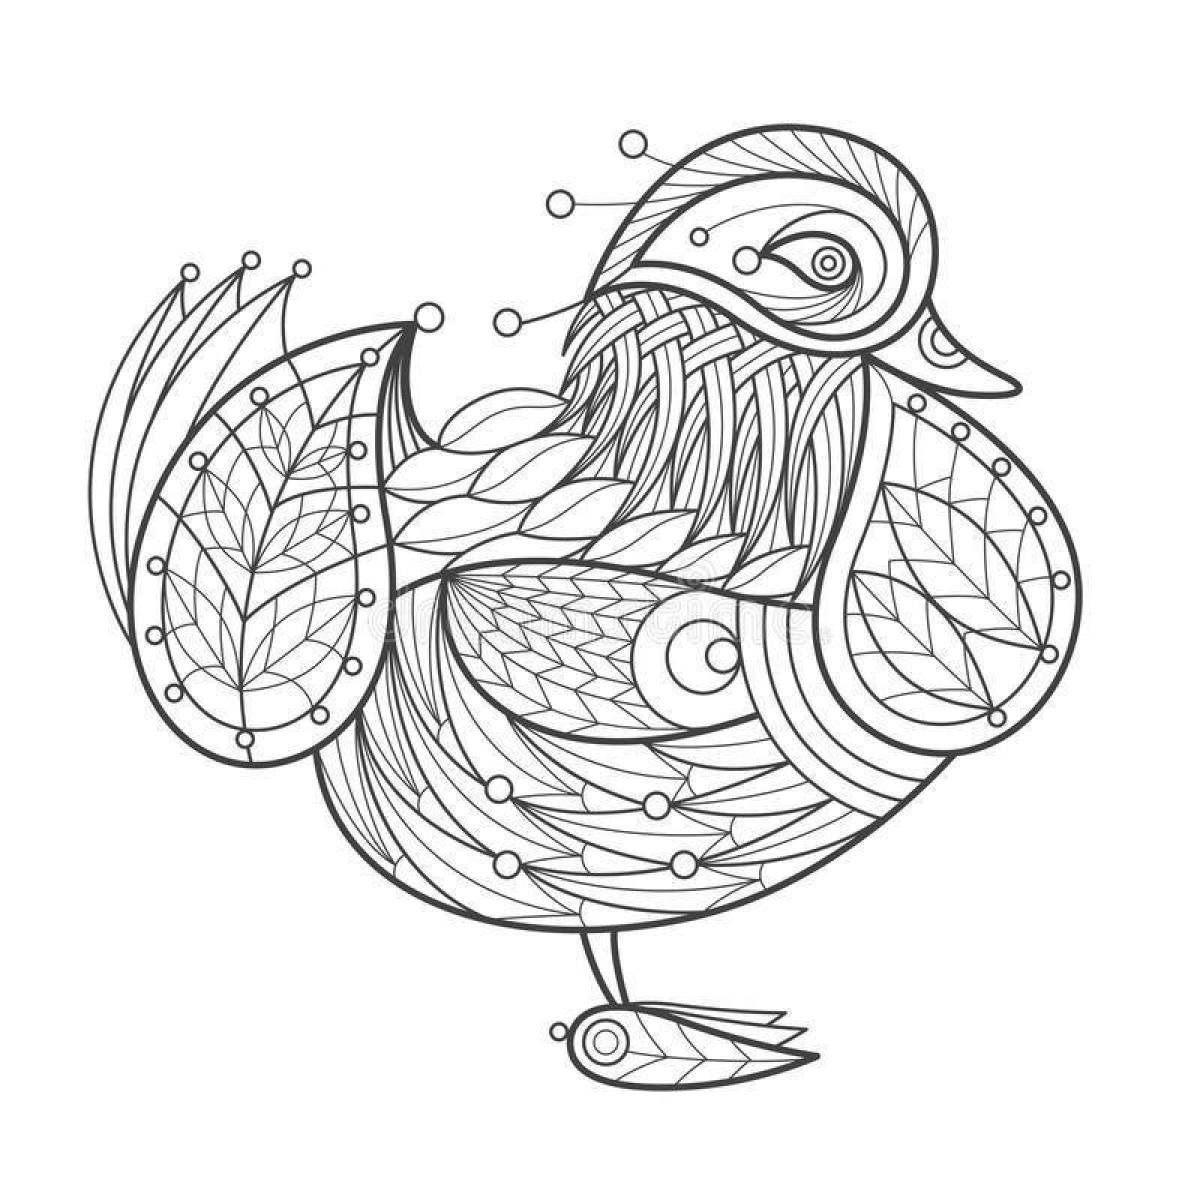 Fabulous mandarin duck coloring page